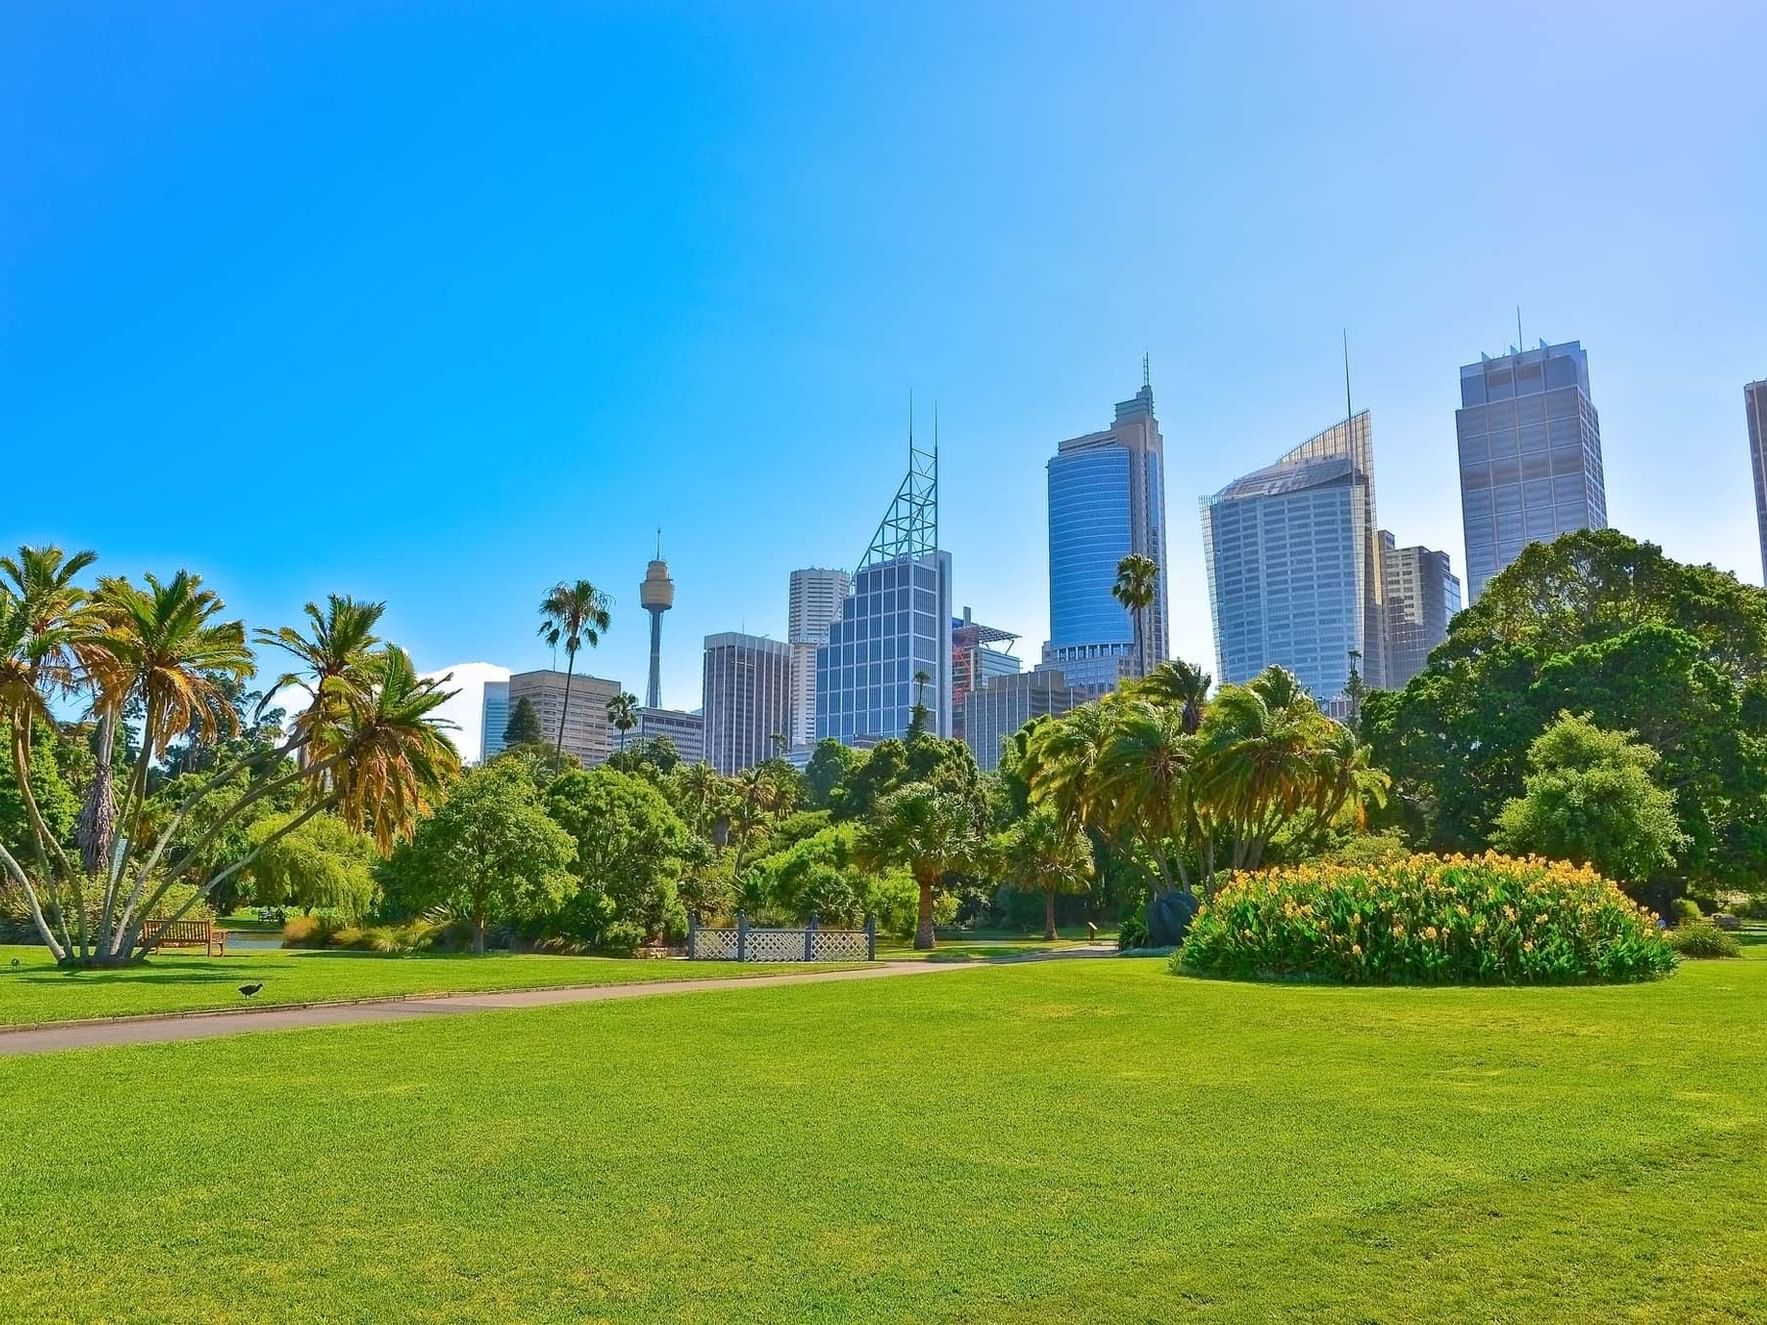 Royal Botanical Gardens Sydney